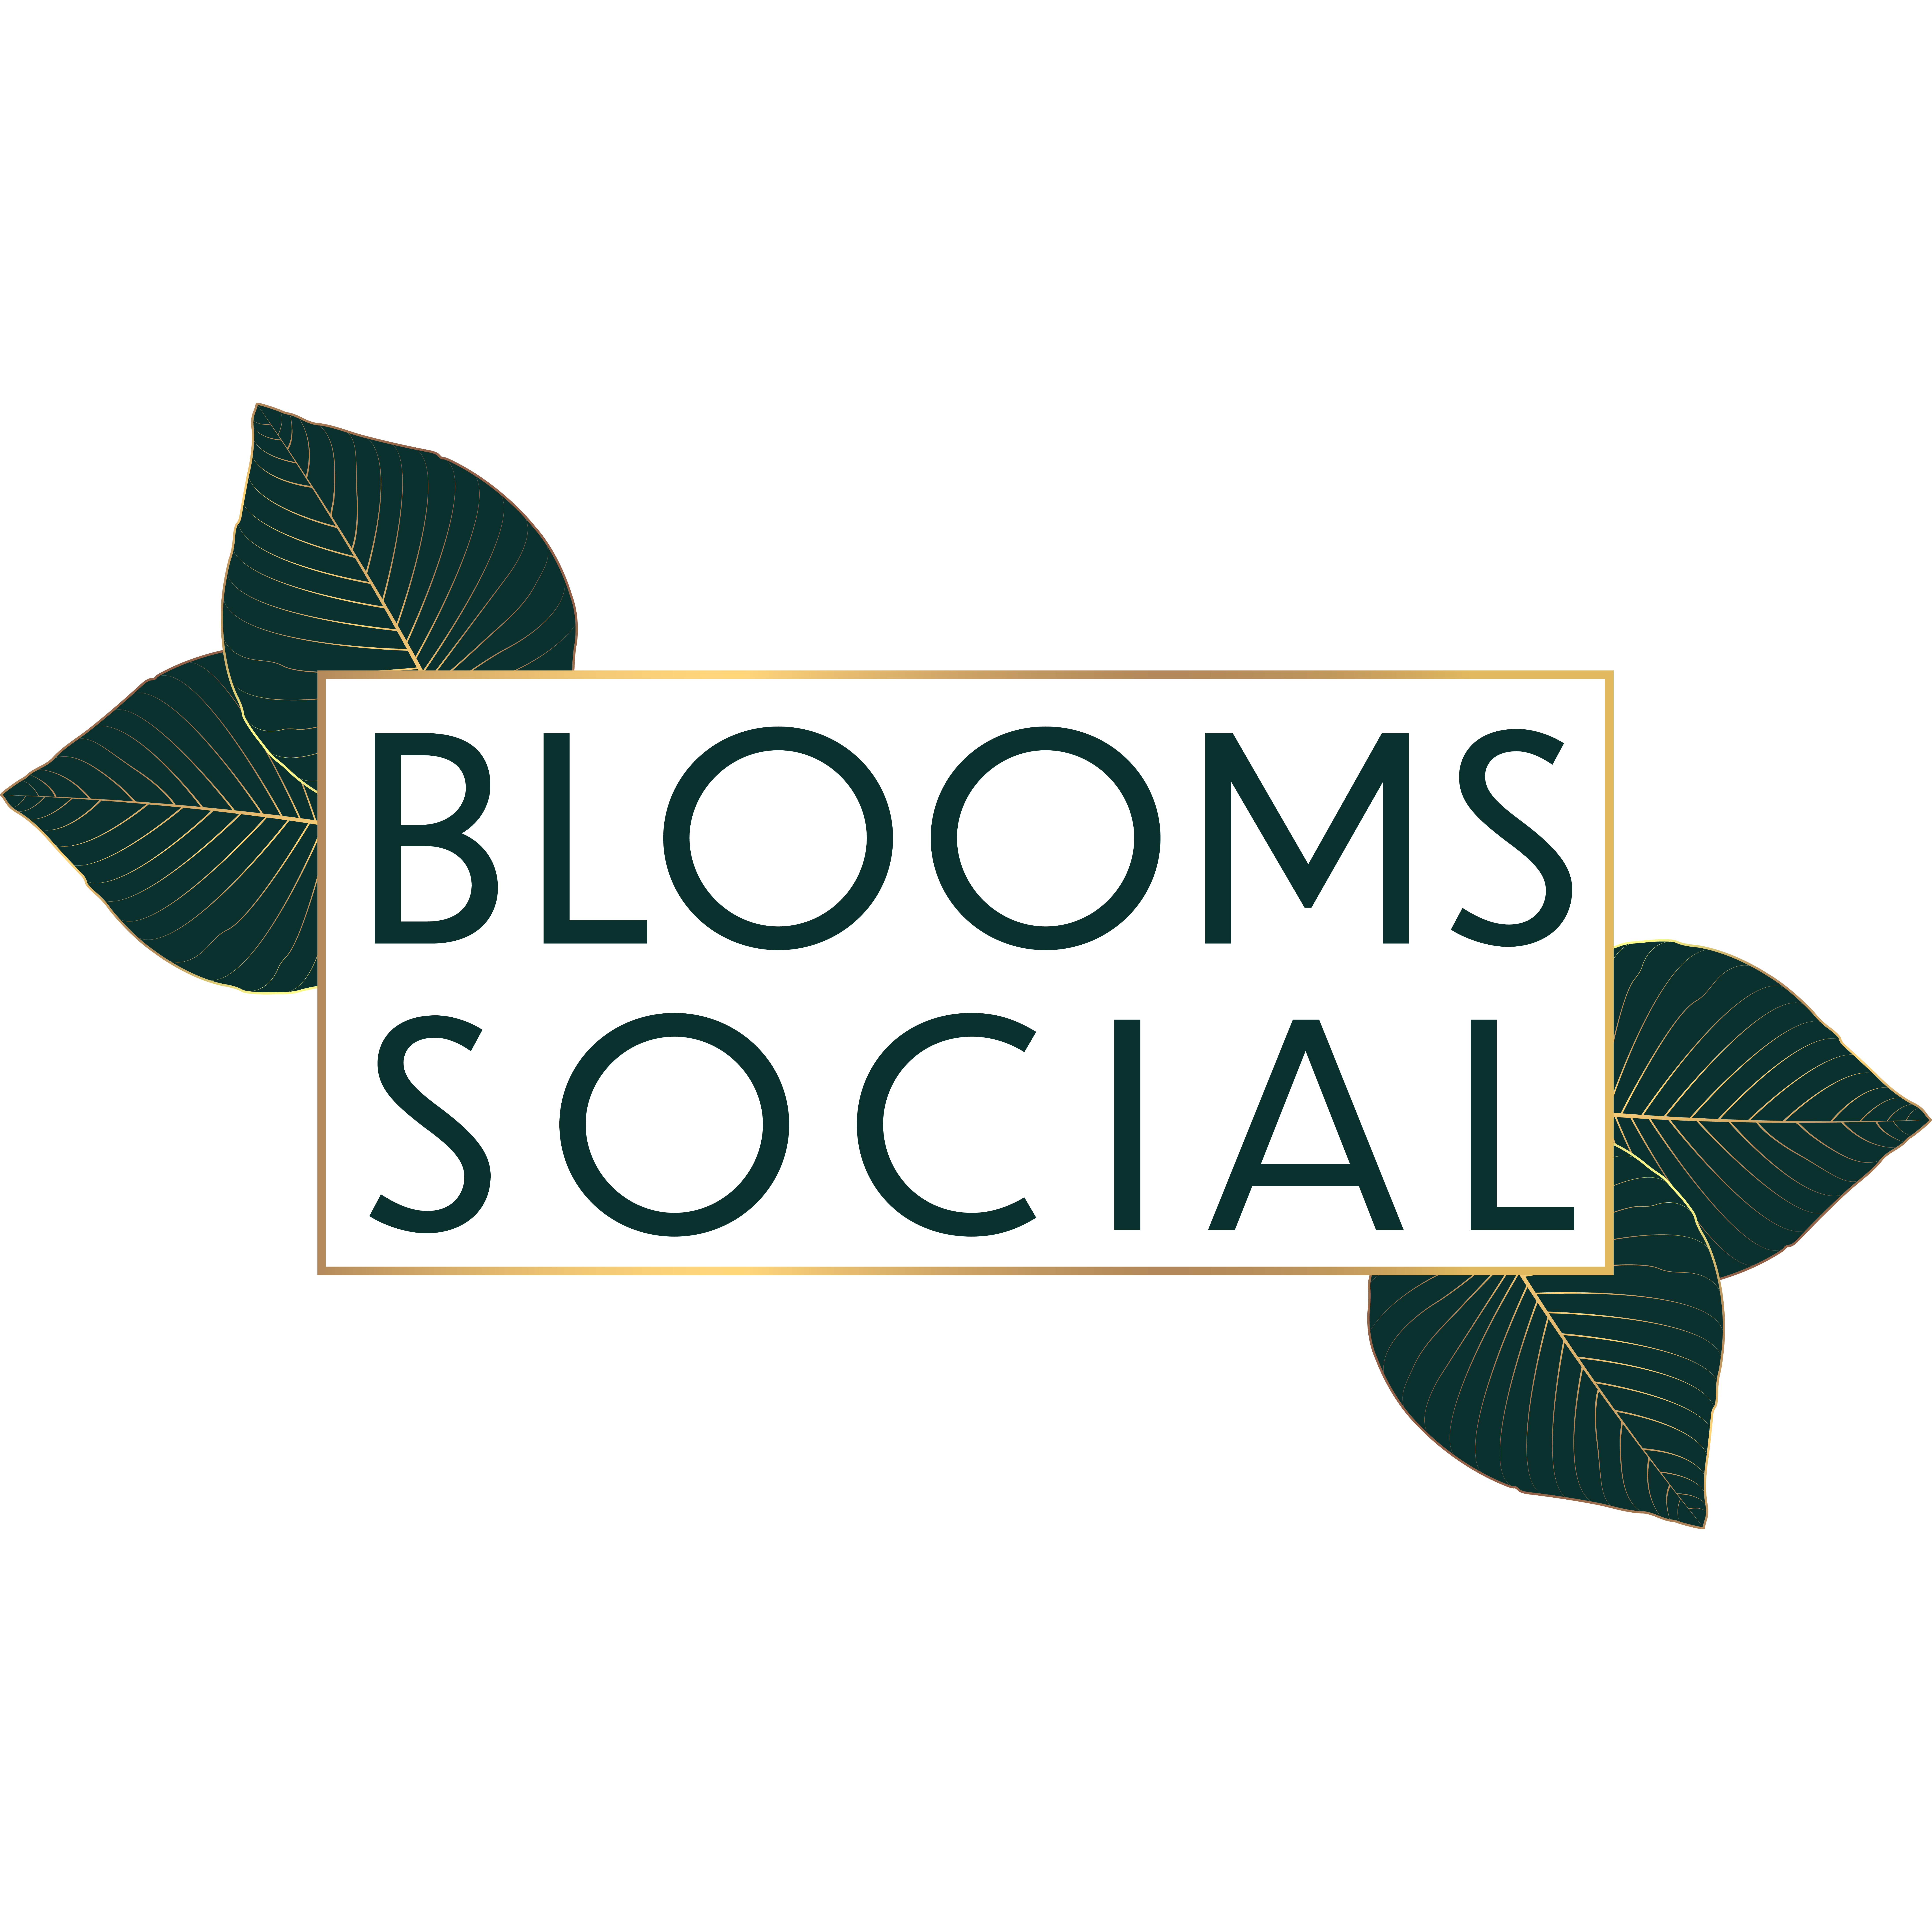 Blooms Social - West Palm Beach, FL 33407 - (561)573-8903 | ShowMeLocal.com